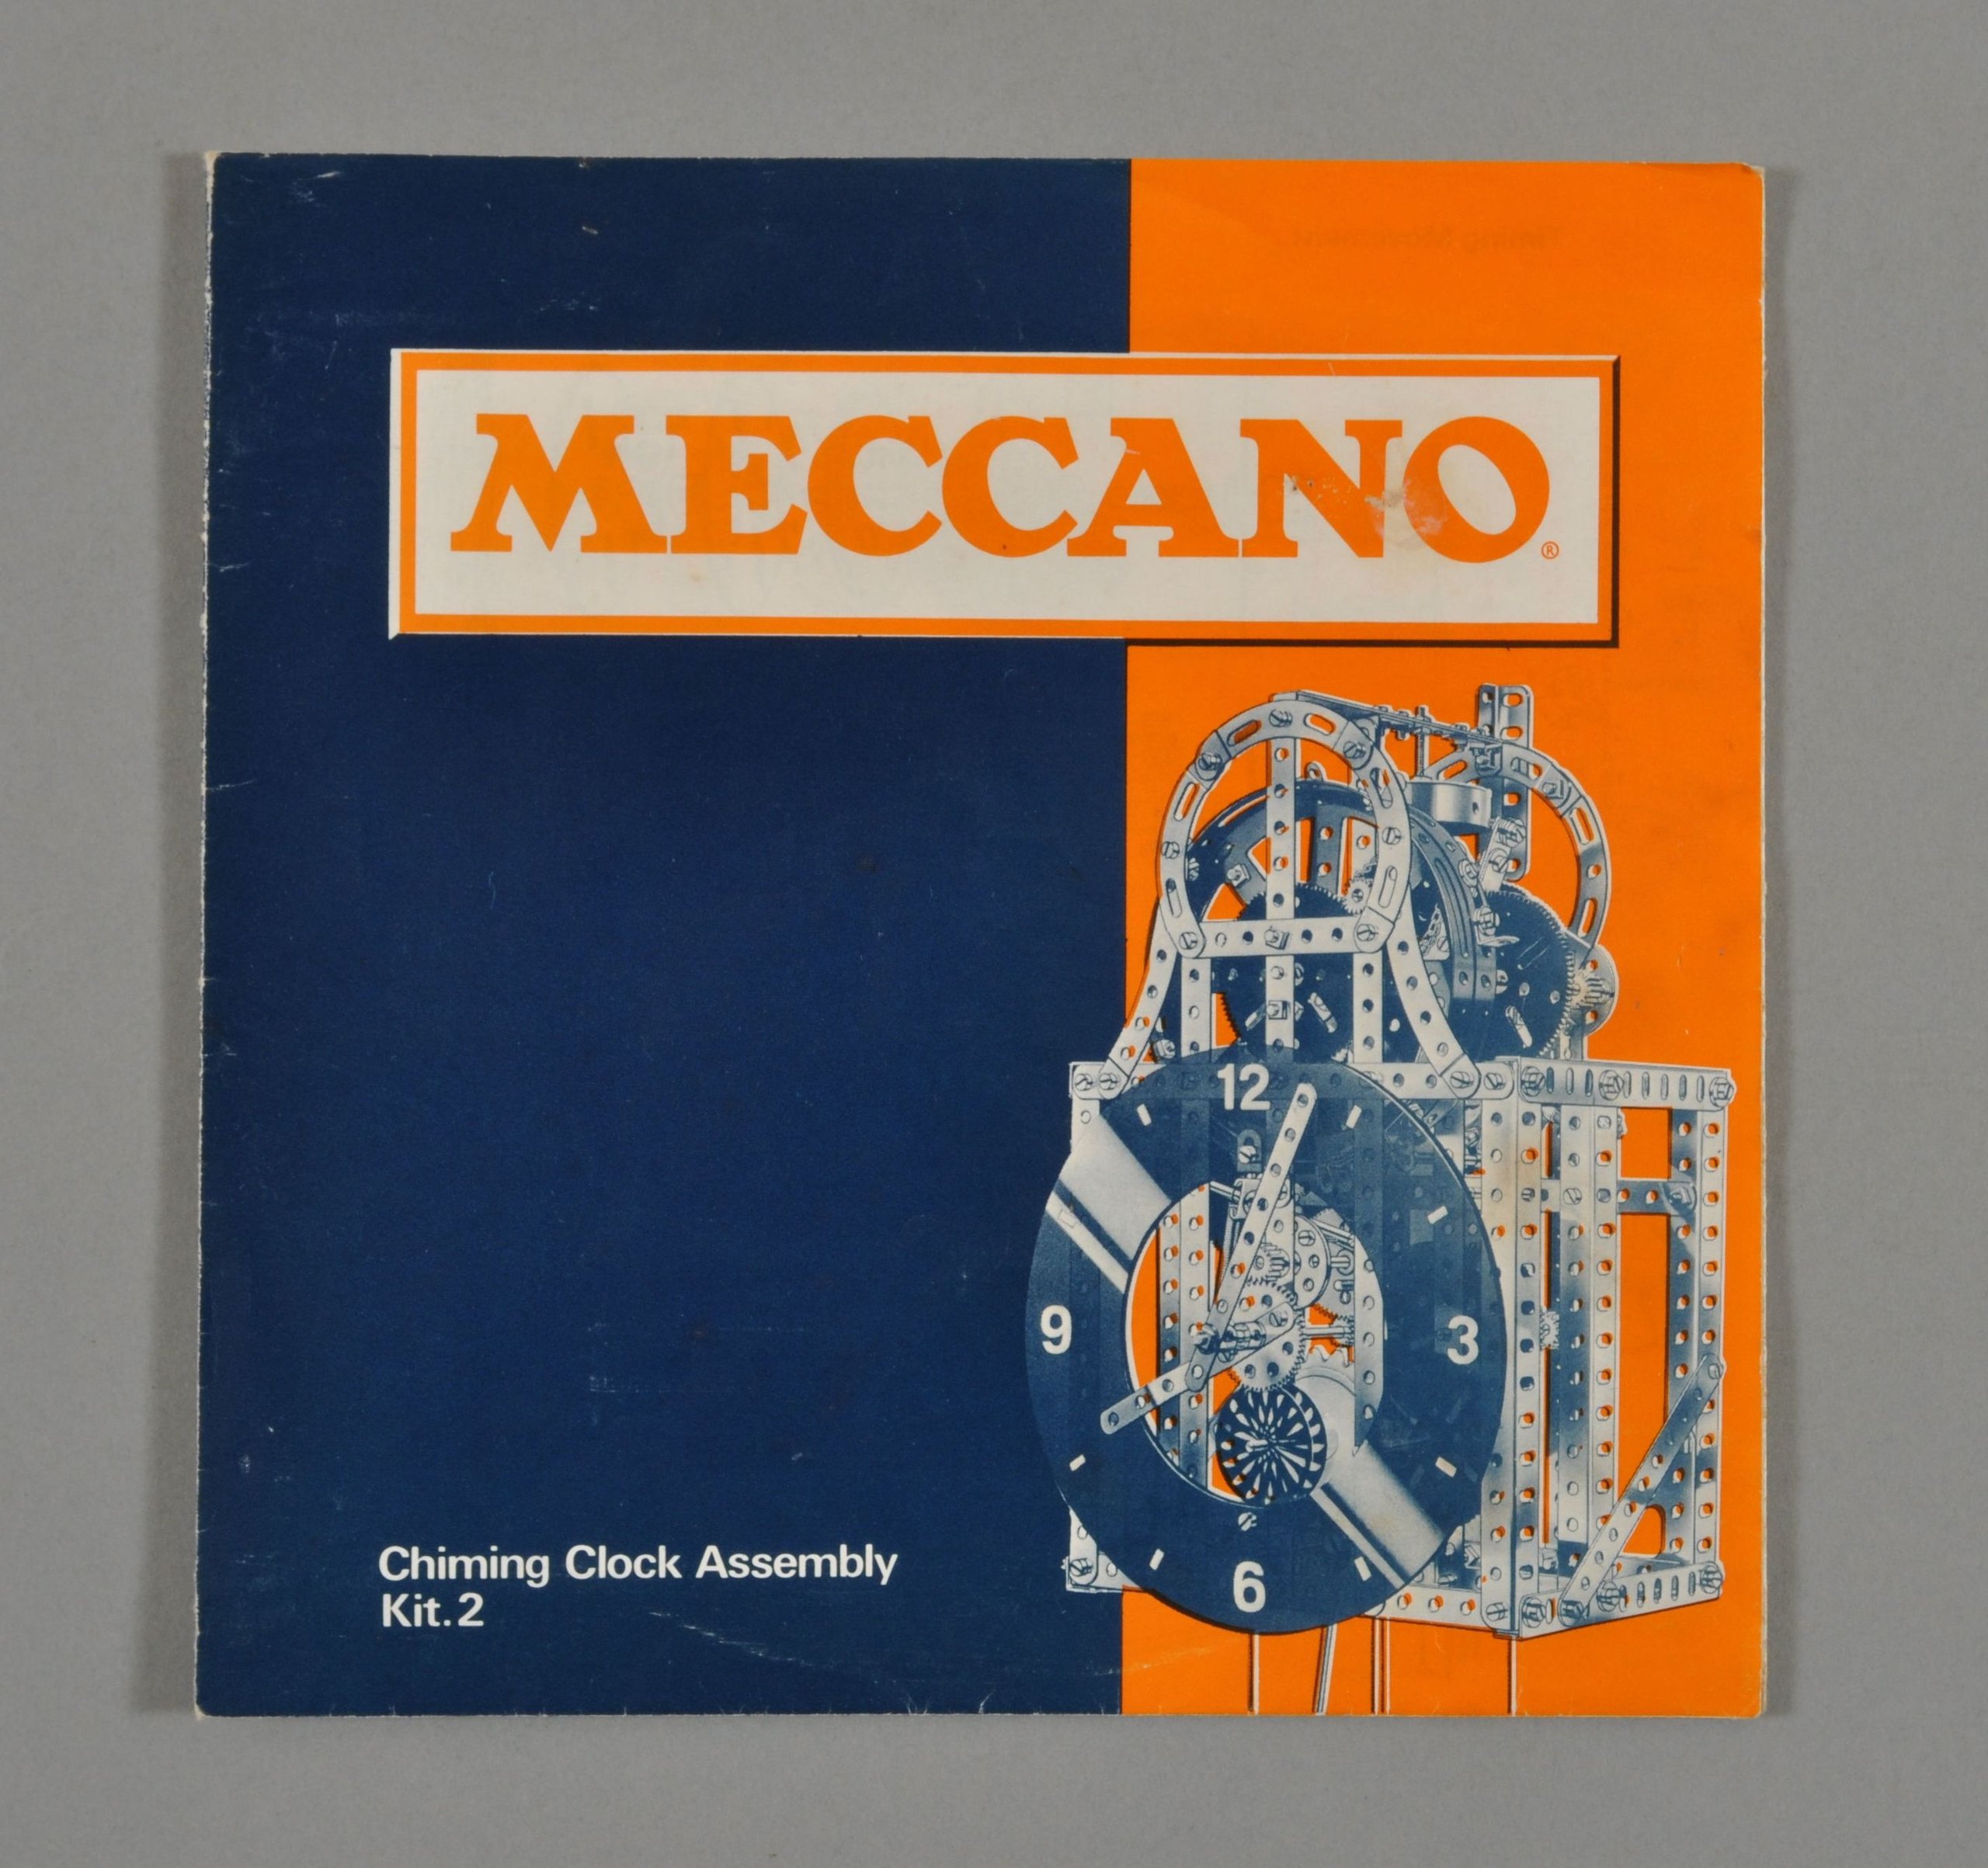 Powerhouse Collection - Meccano leaflet